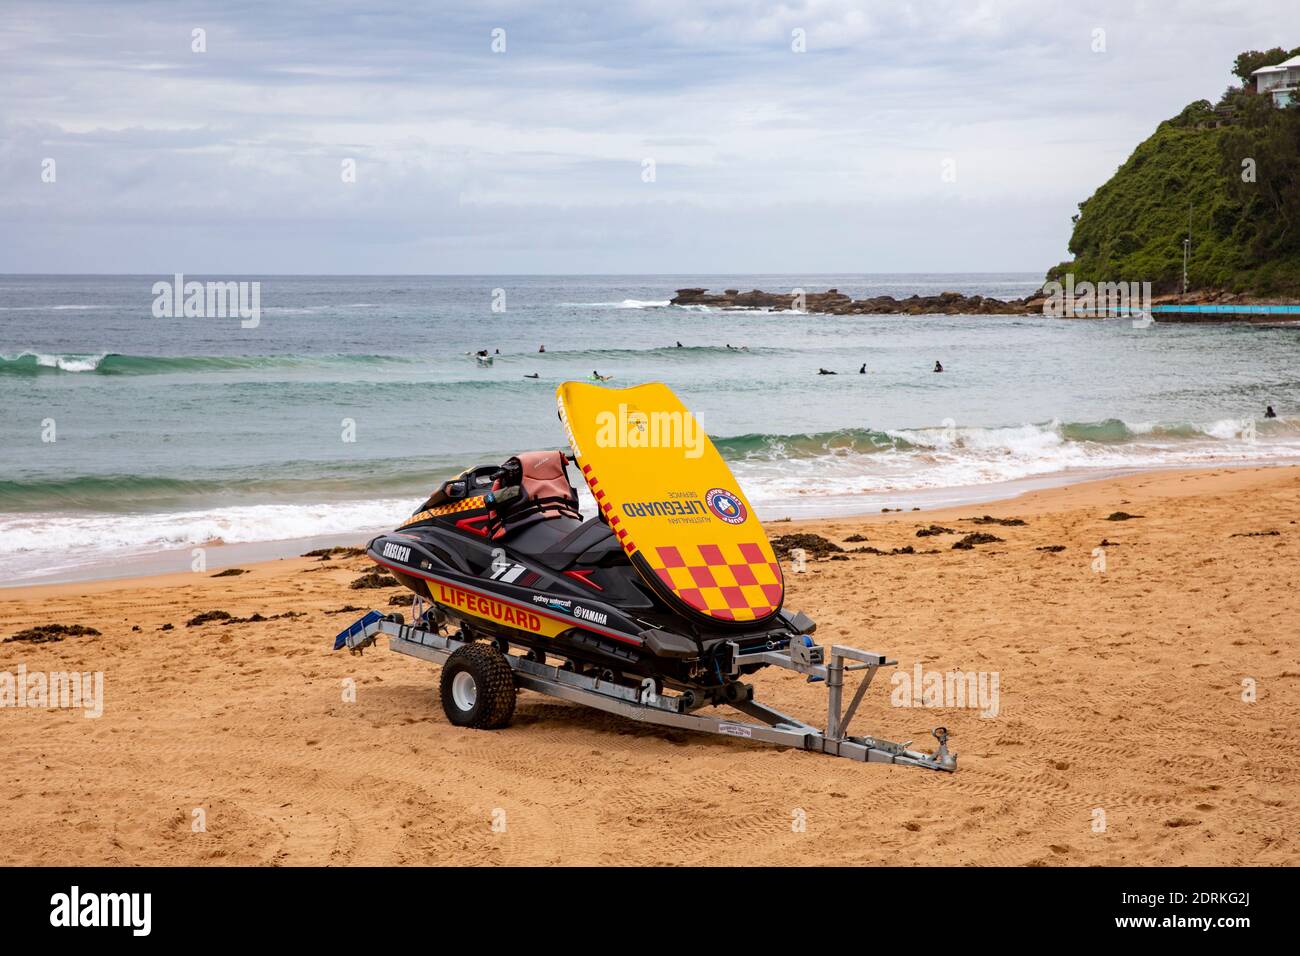 Palm beach Sydney, australian lifeguard surf rescue jet ski and lifeguard surfboard,Sydney,Australia Stock Photo